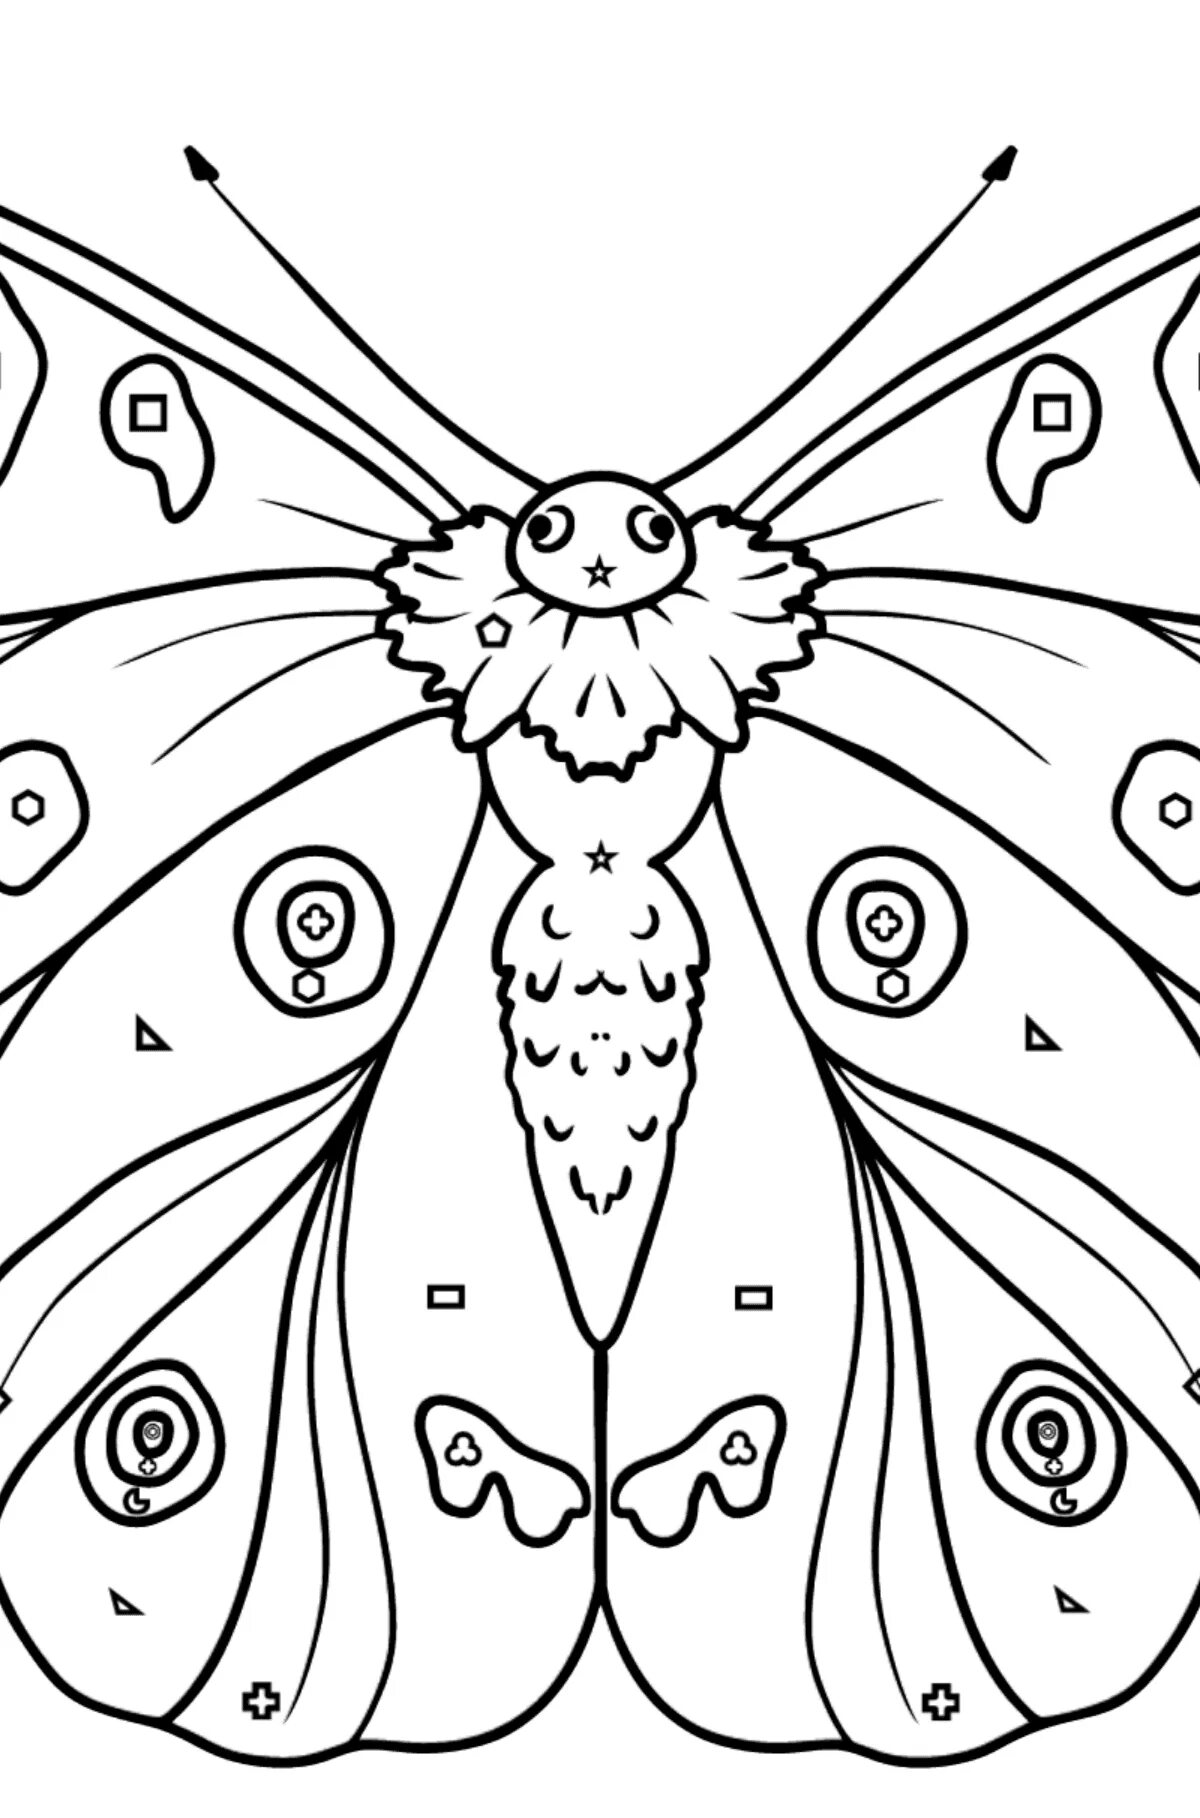 Apollo butterfly #13